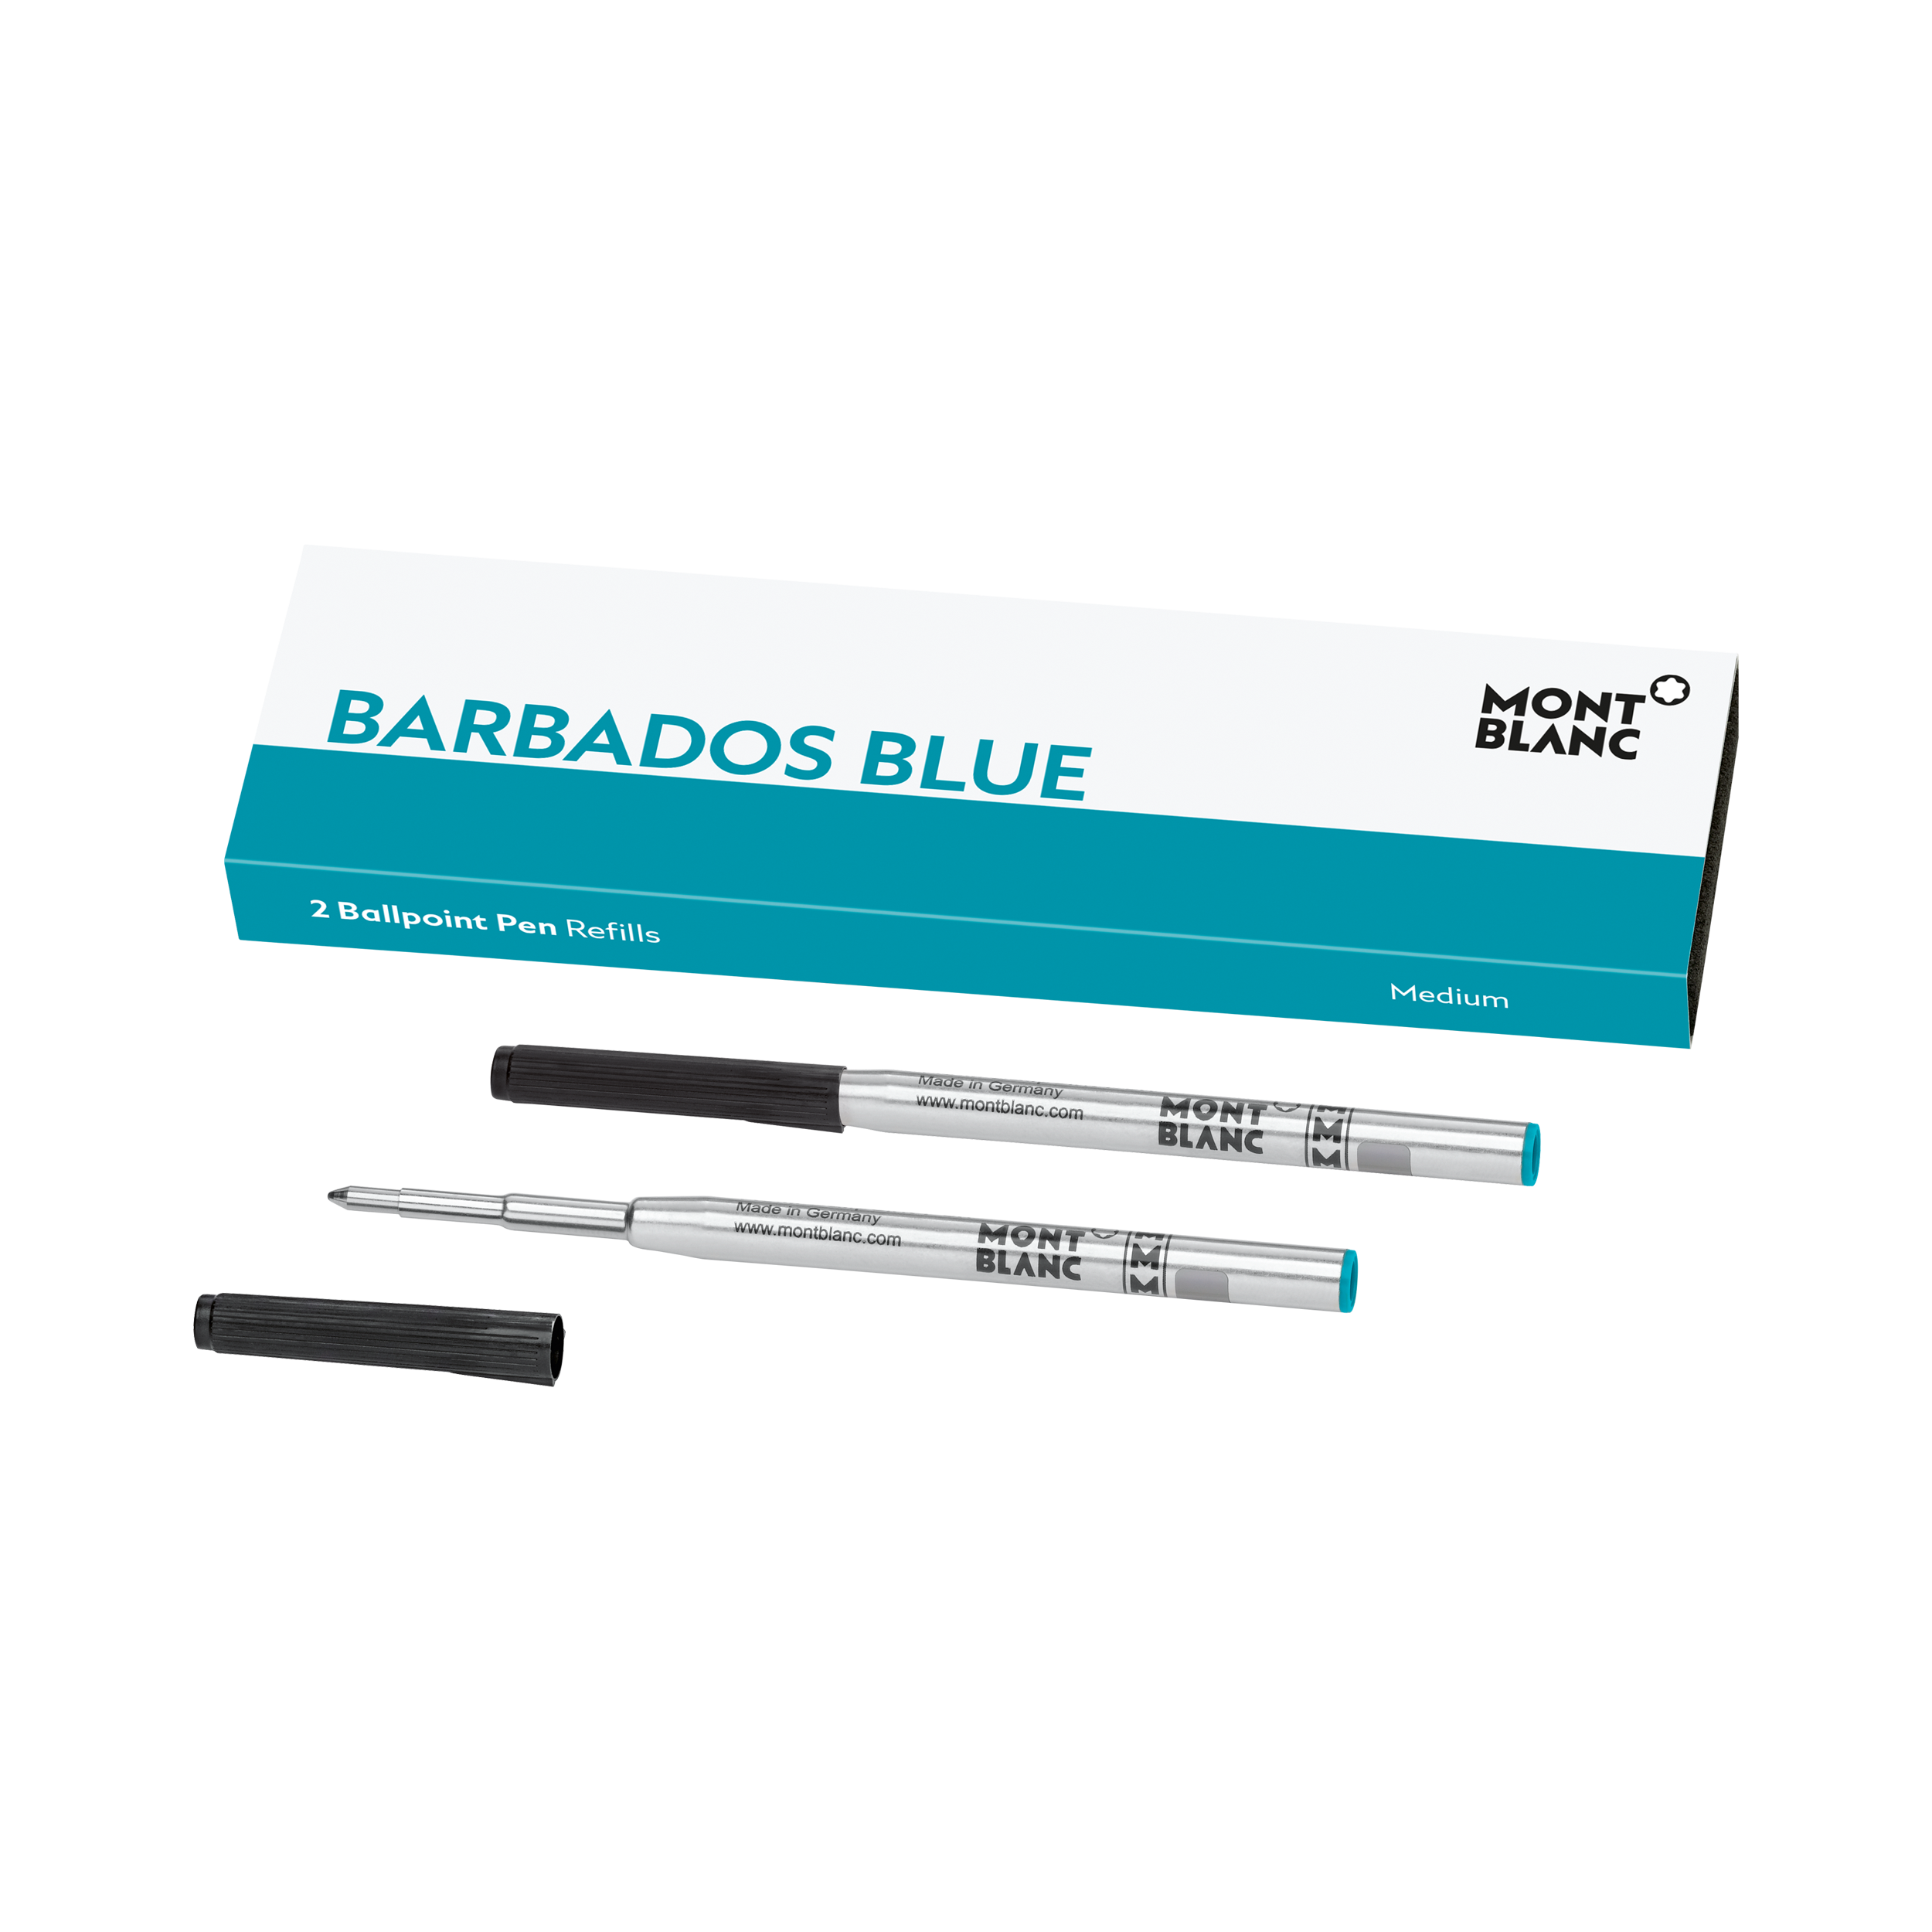 Barbados Blue ballpoint refills * Montblanc 